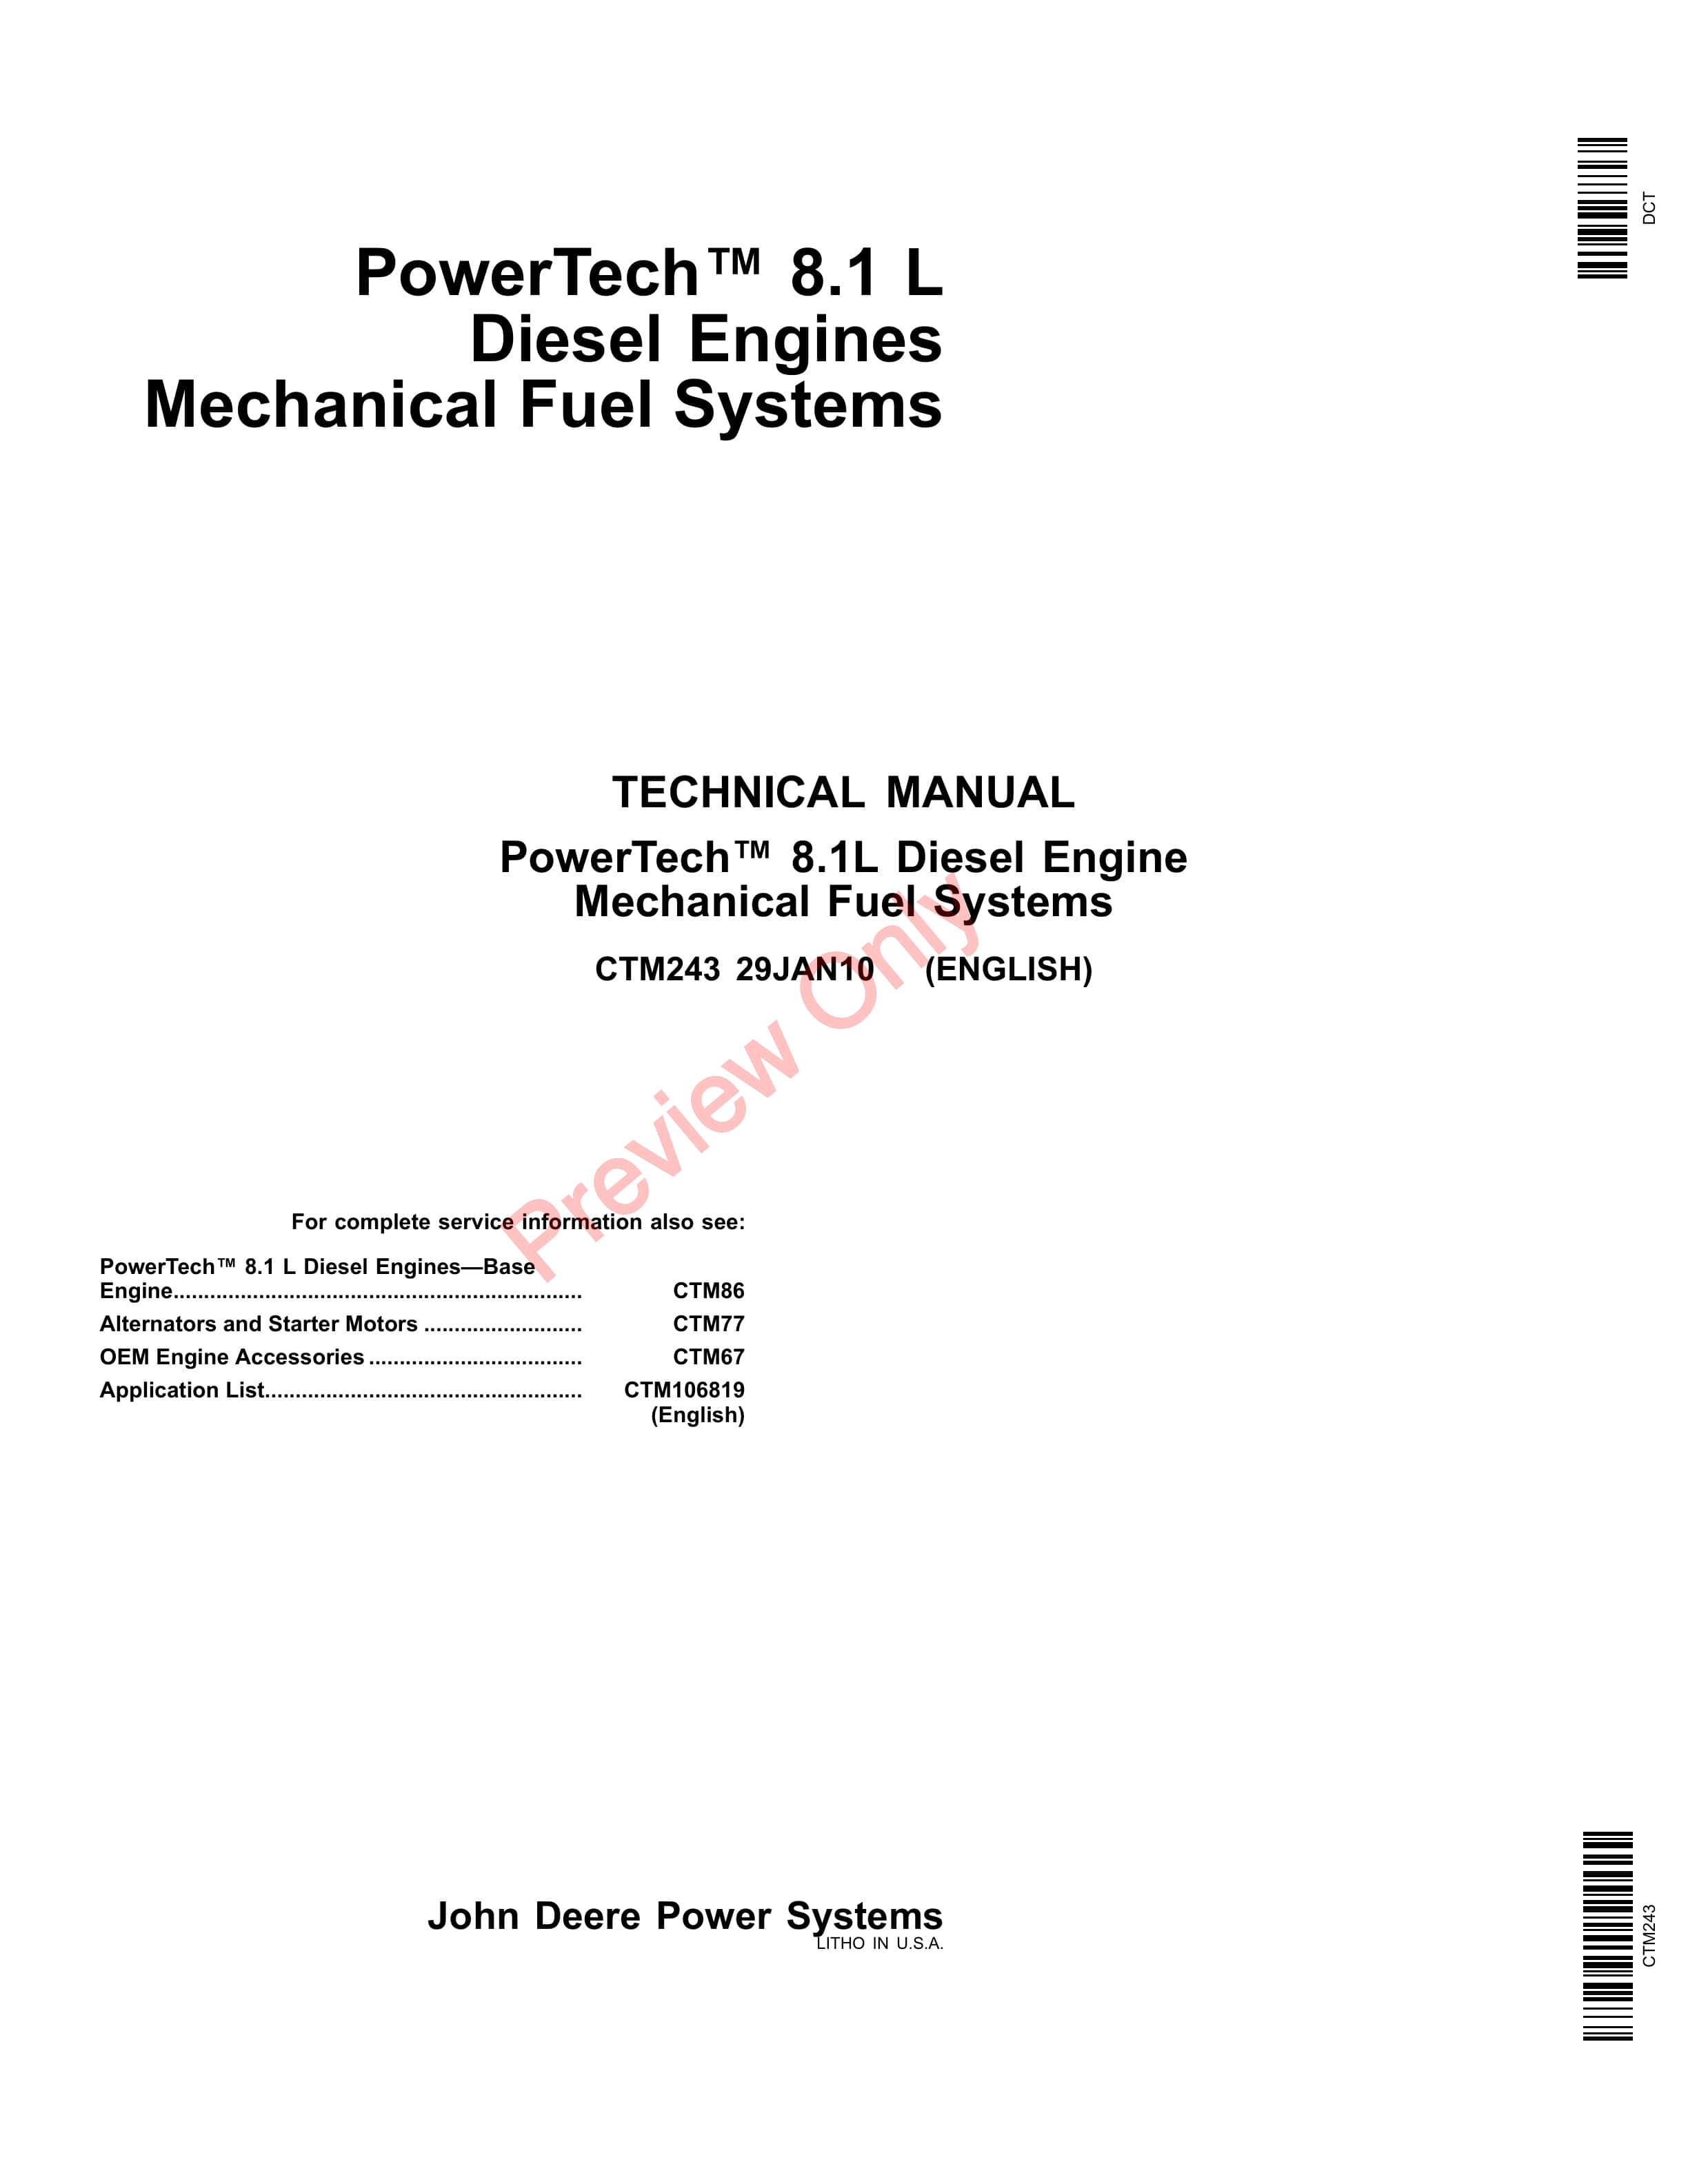 John Deere PowerTech 8.1 LDiesel Engines Mechanical Fuel Systems Technical Manual CTM243 17JUL17 PDF